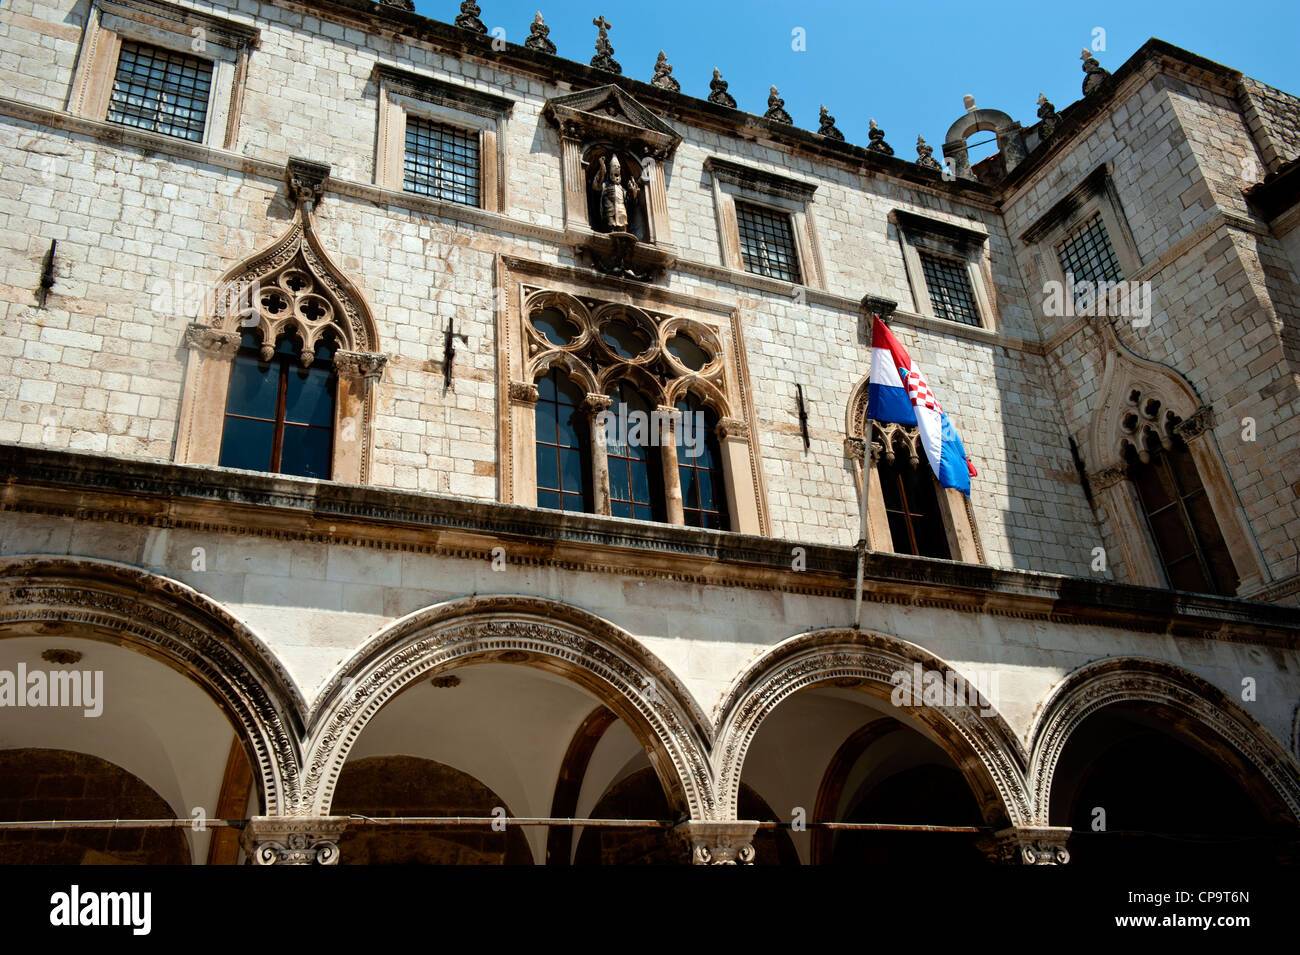 Der Sponza-Palast-Hosting-die Gedenkstätte Zimmer Dubrovnik Verteidiger, Boulevard Stadrun, Altstadt, Dubrovnik. Kroatien. Stockfoto